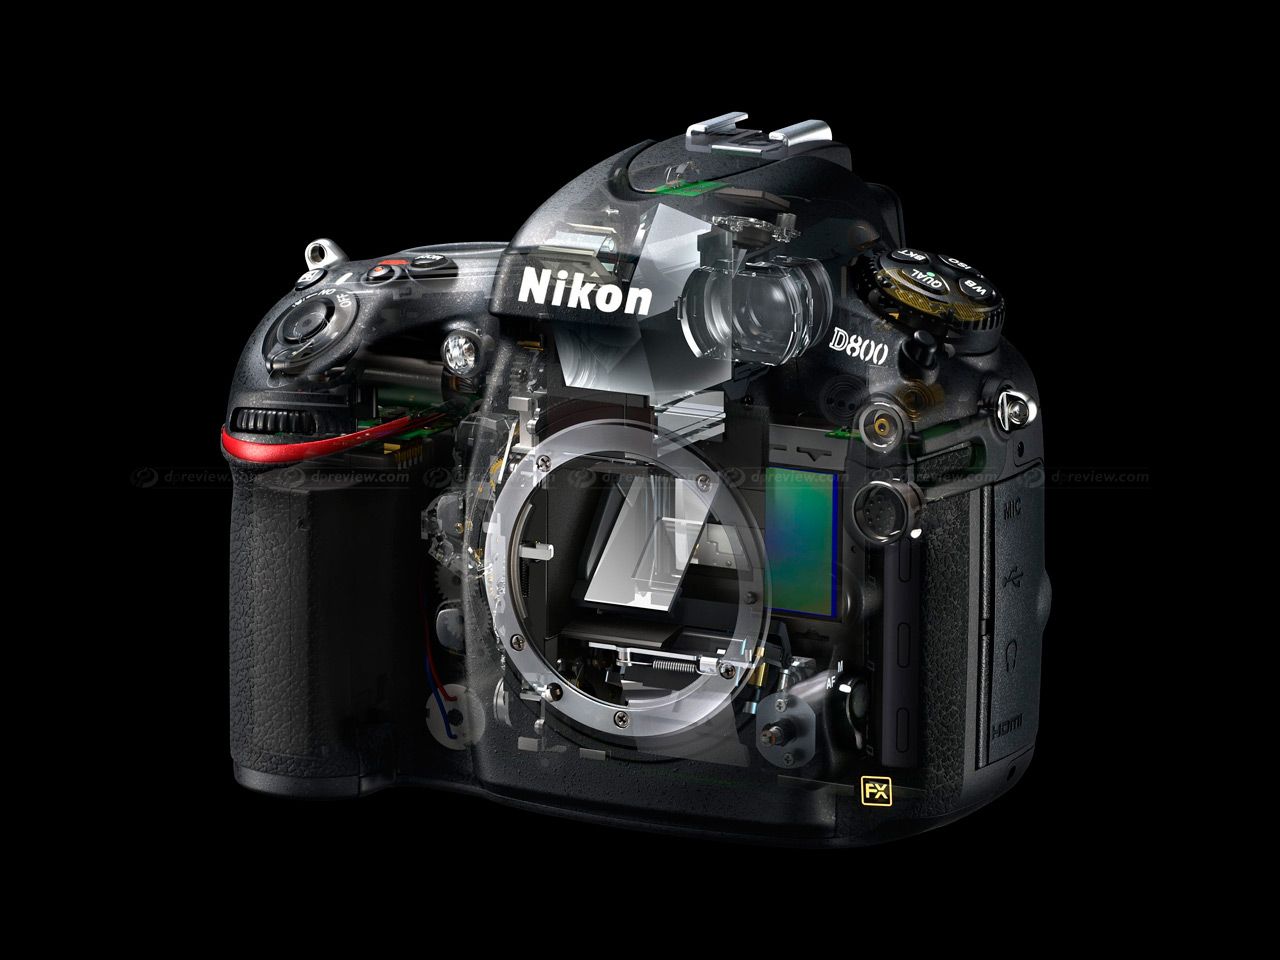 Nikon D800 offers imaging potential to rival medium format cameras